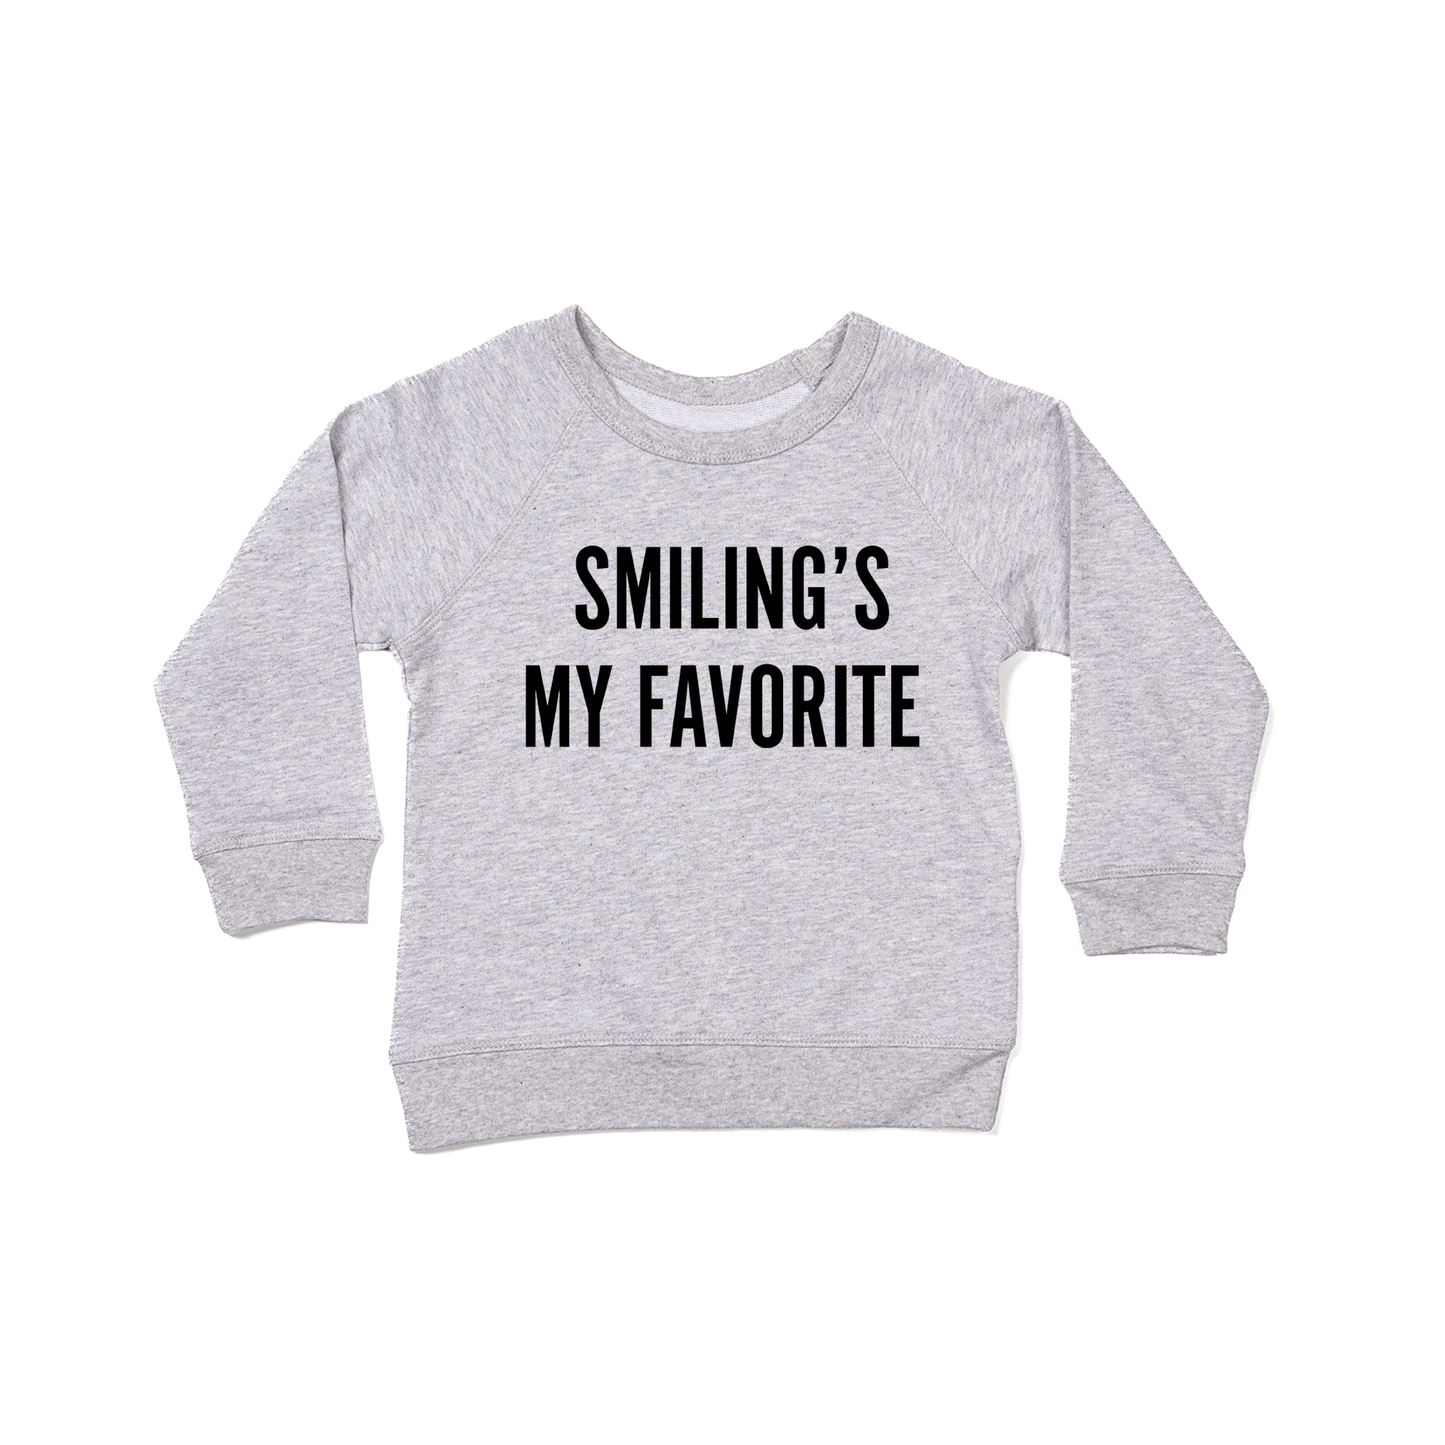 Smiling's My Favorite (Black) - Kids Sweatshirt (Heather Gray)